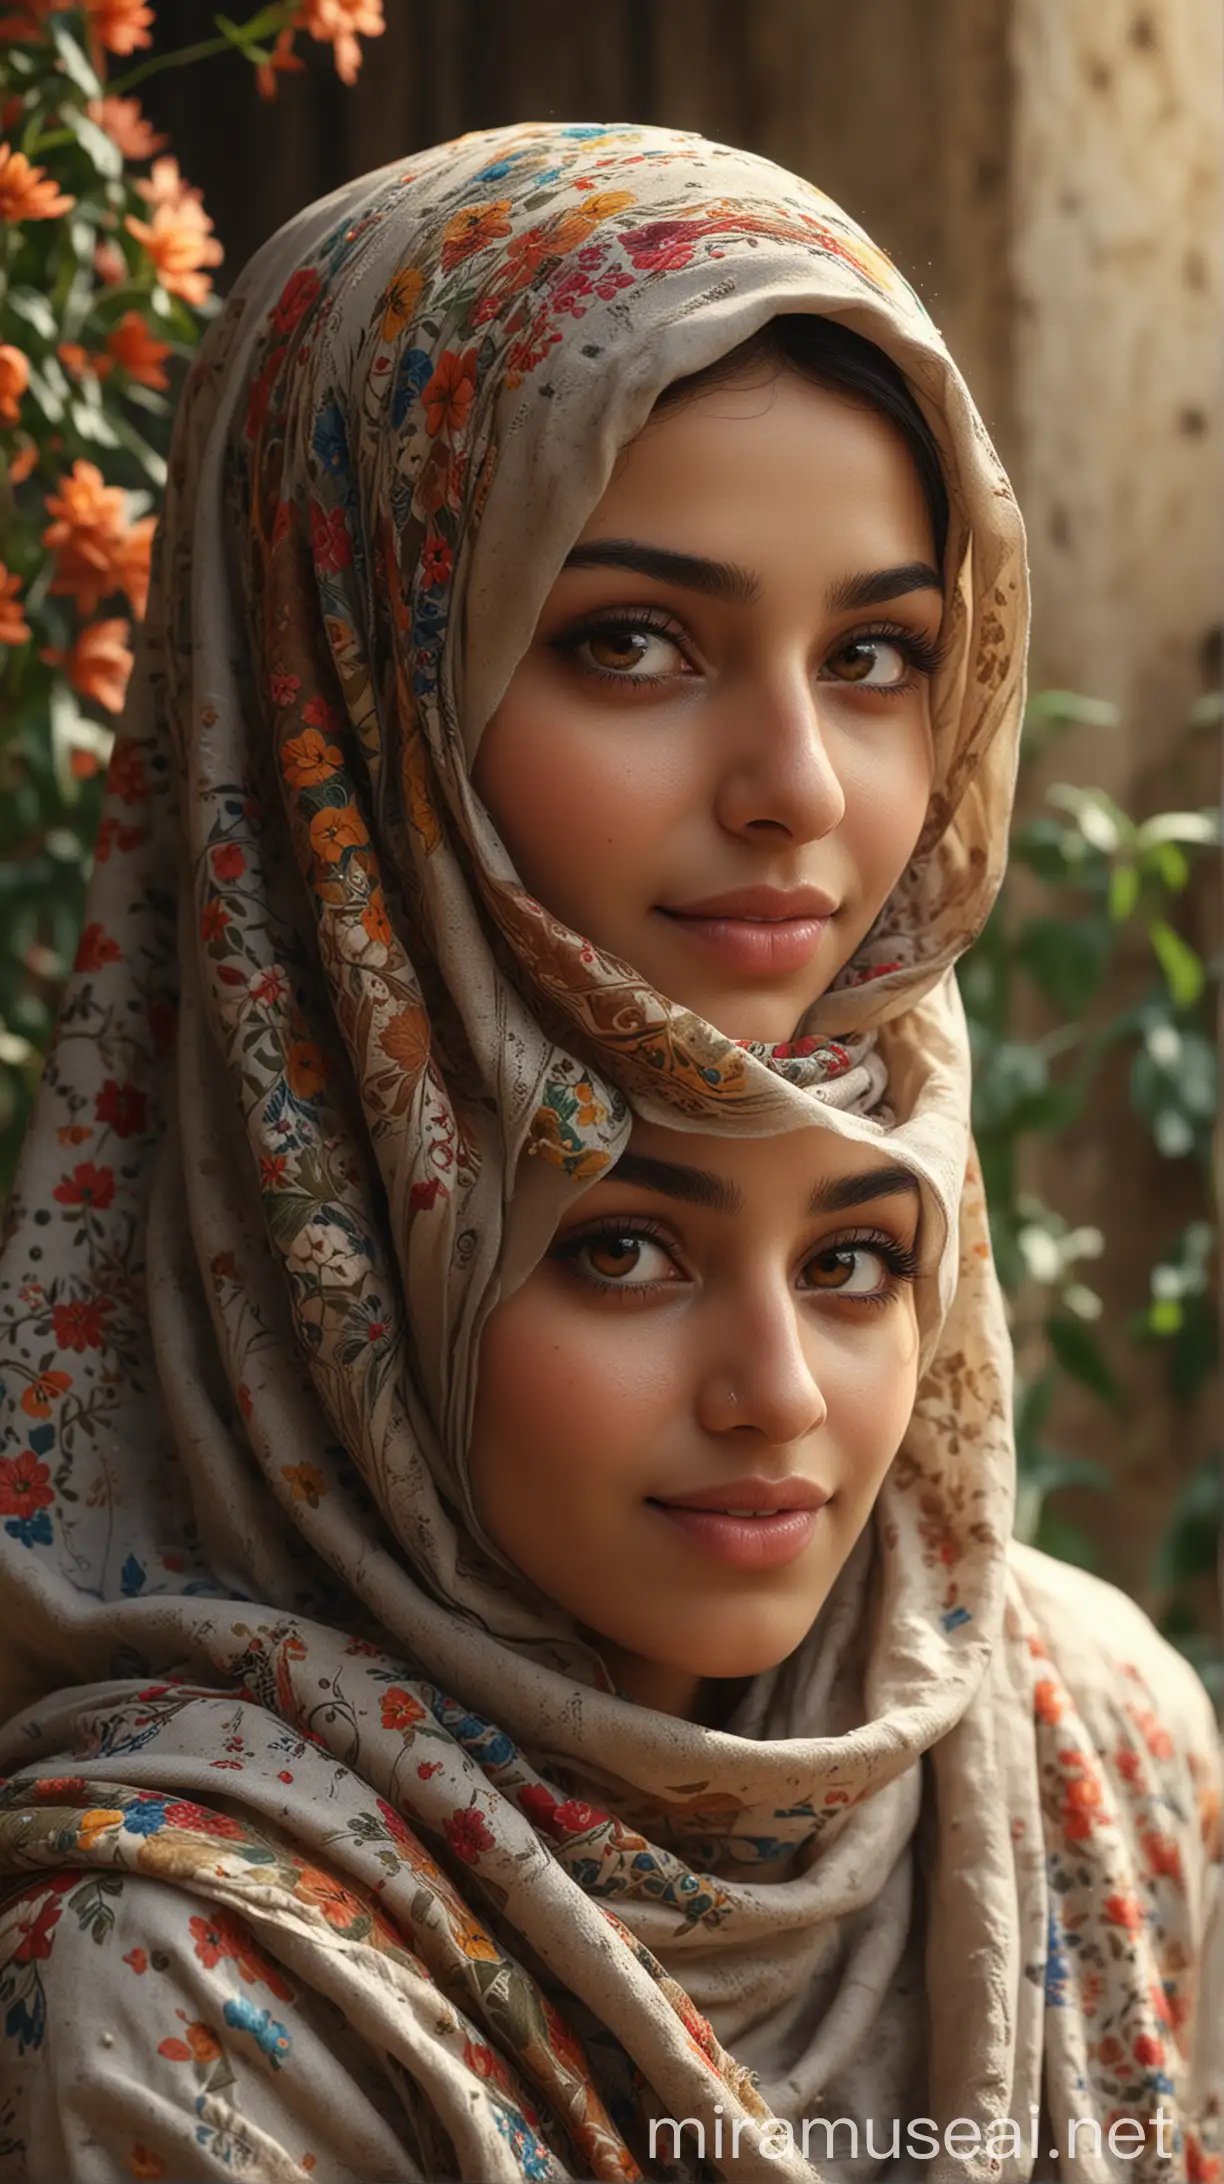 Majestic Arab Woman in Hijab Amidst Vibrant Floral Patterns